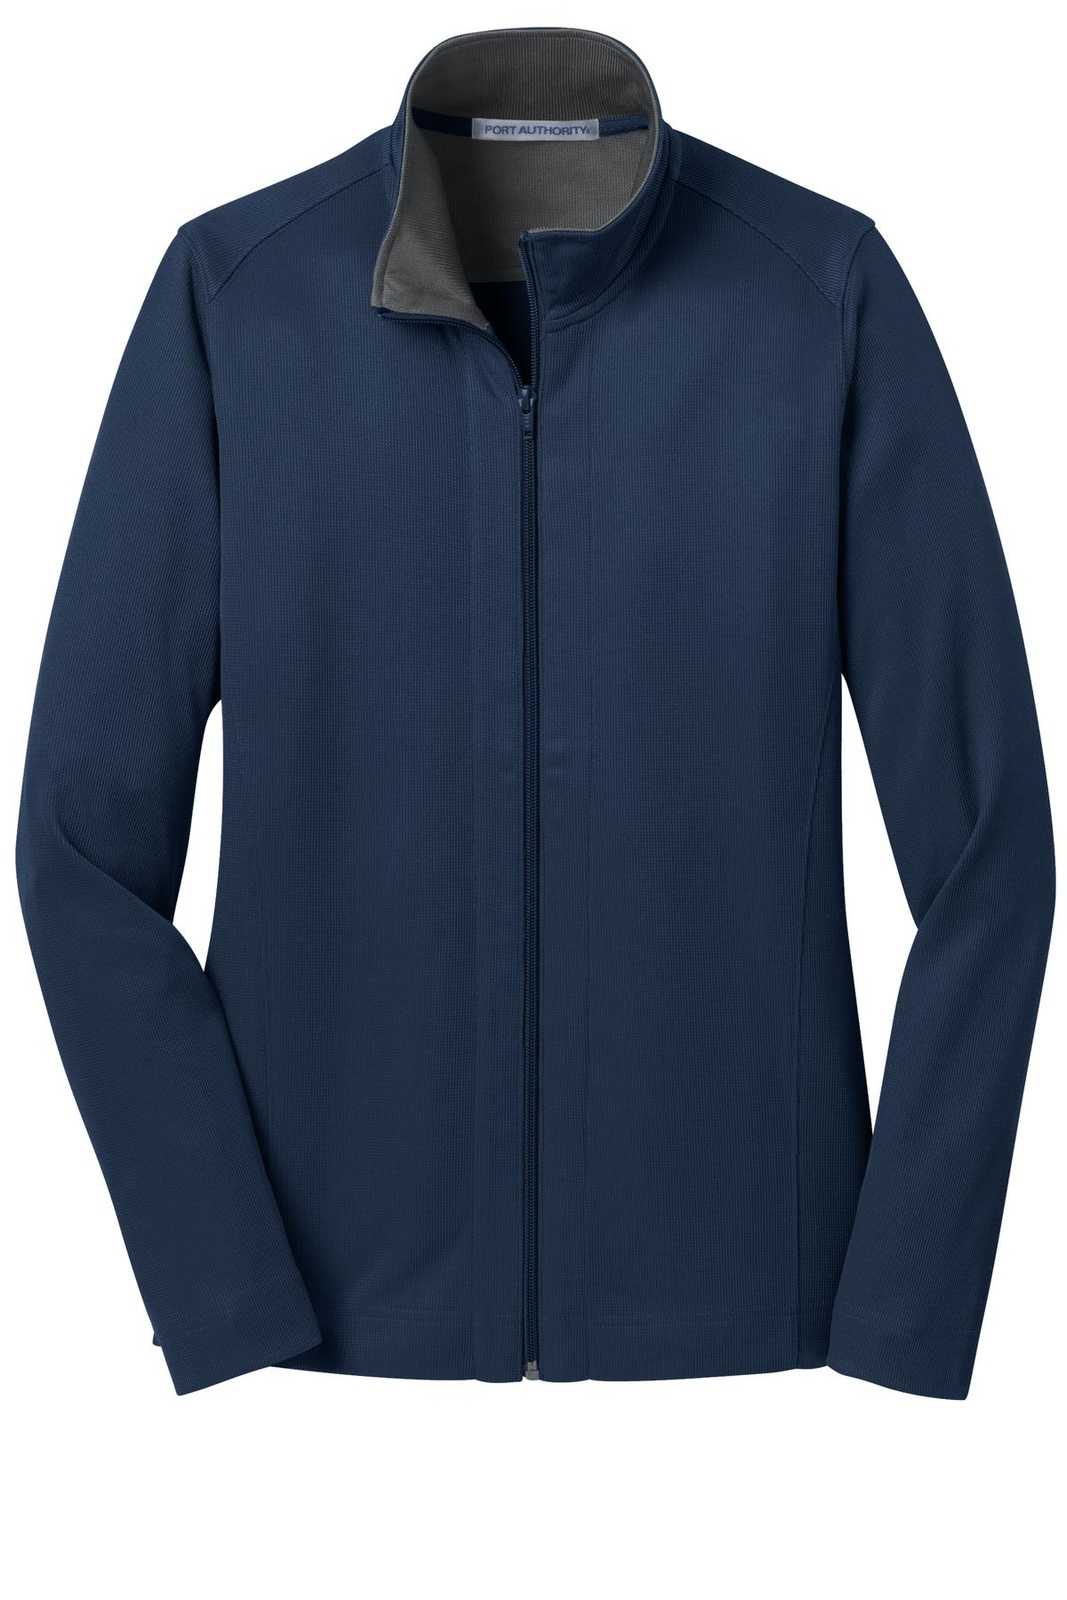 Port Authority L805 Ladies Vertical Texture Full-Zip Jacket - Regatta Blue Iron Gray - HIT a Double - 5